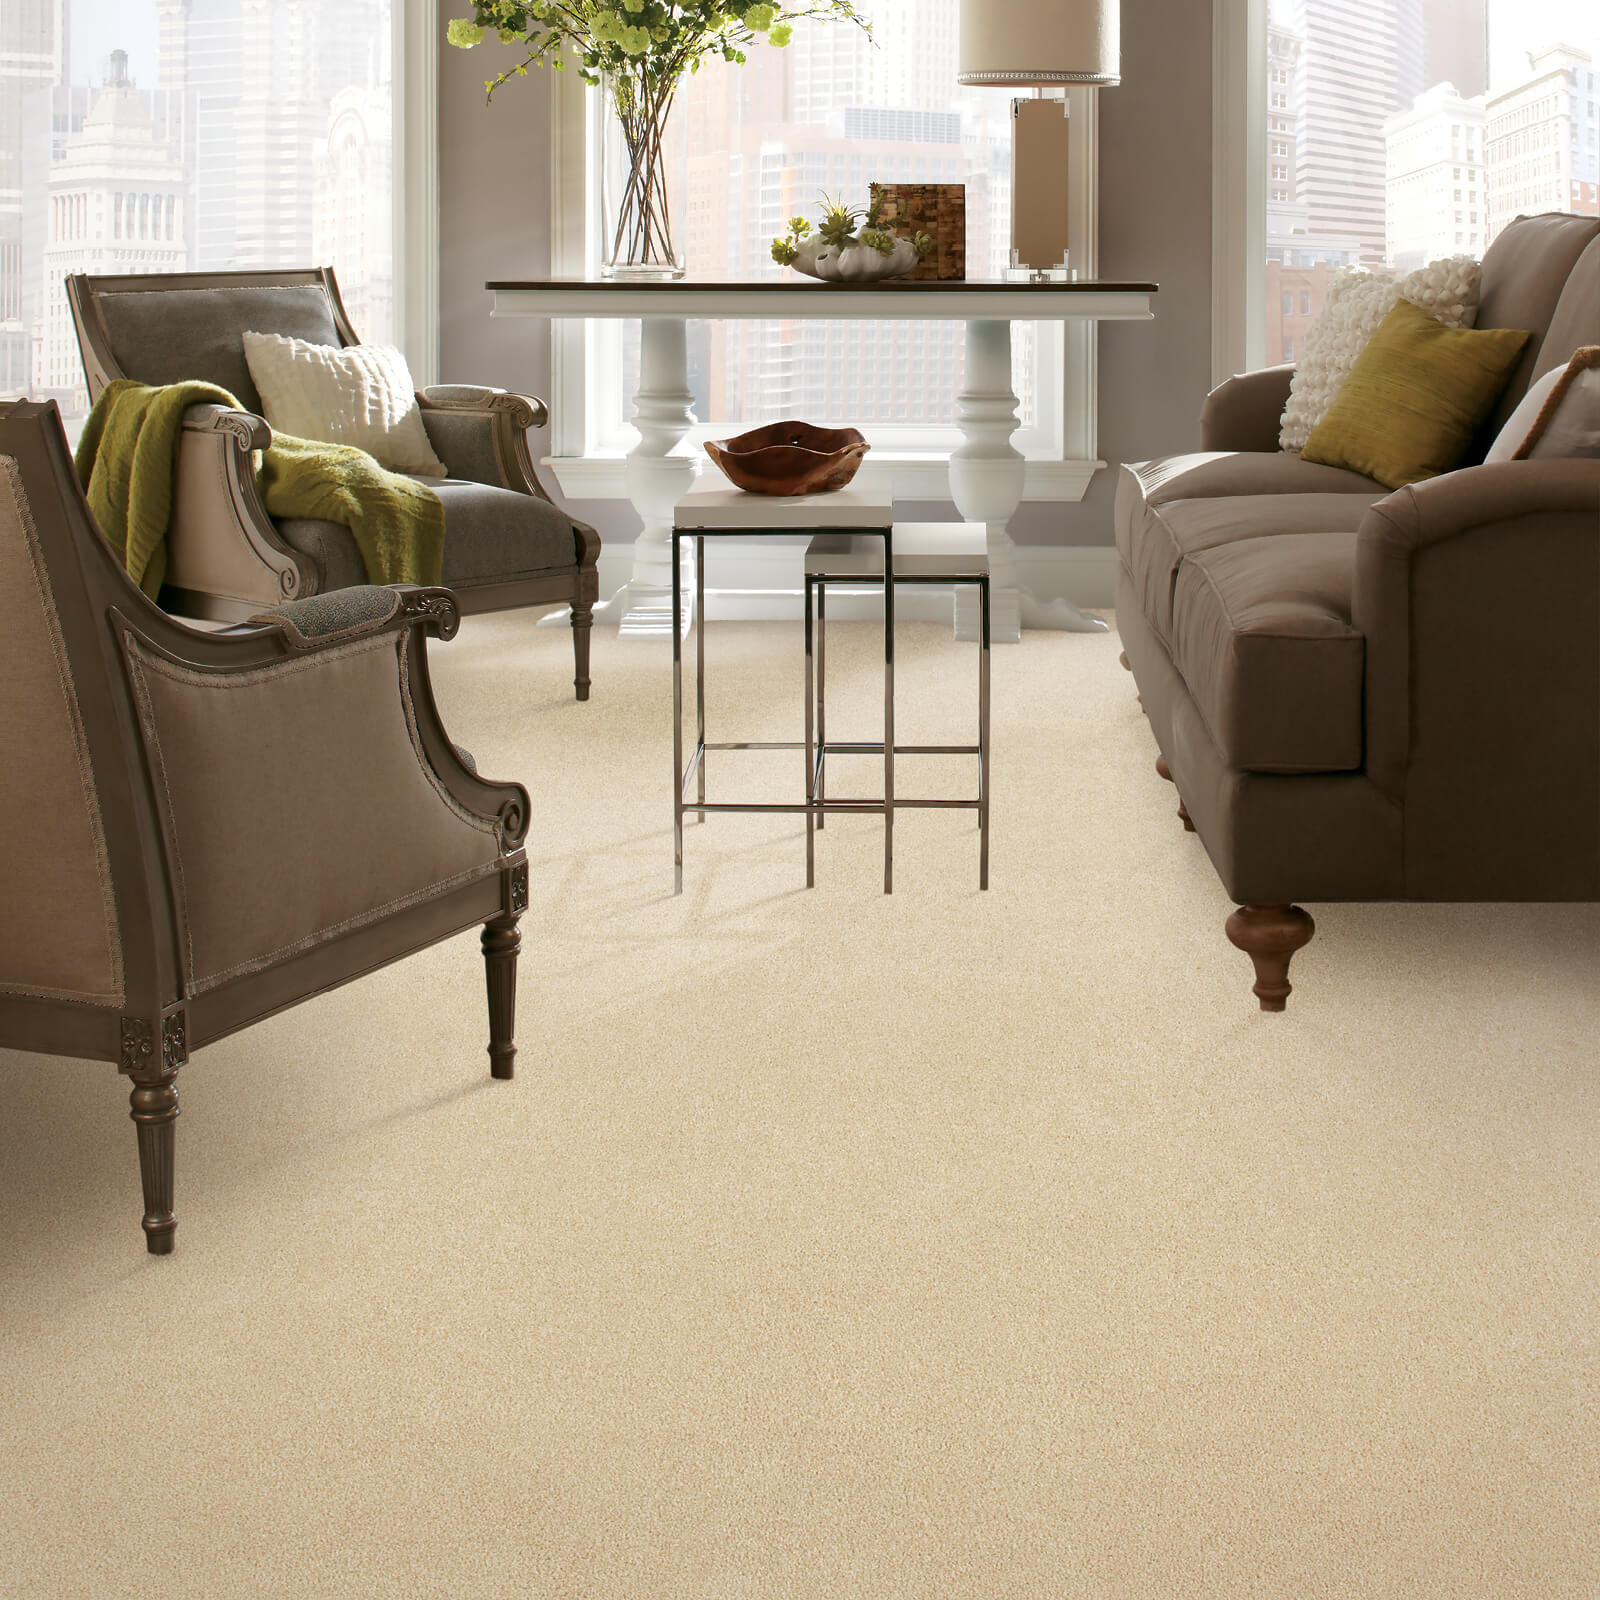 Carpeting in Living Room | Haley's Flooring & Interiors